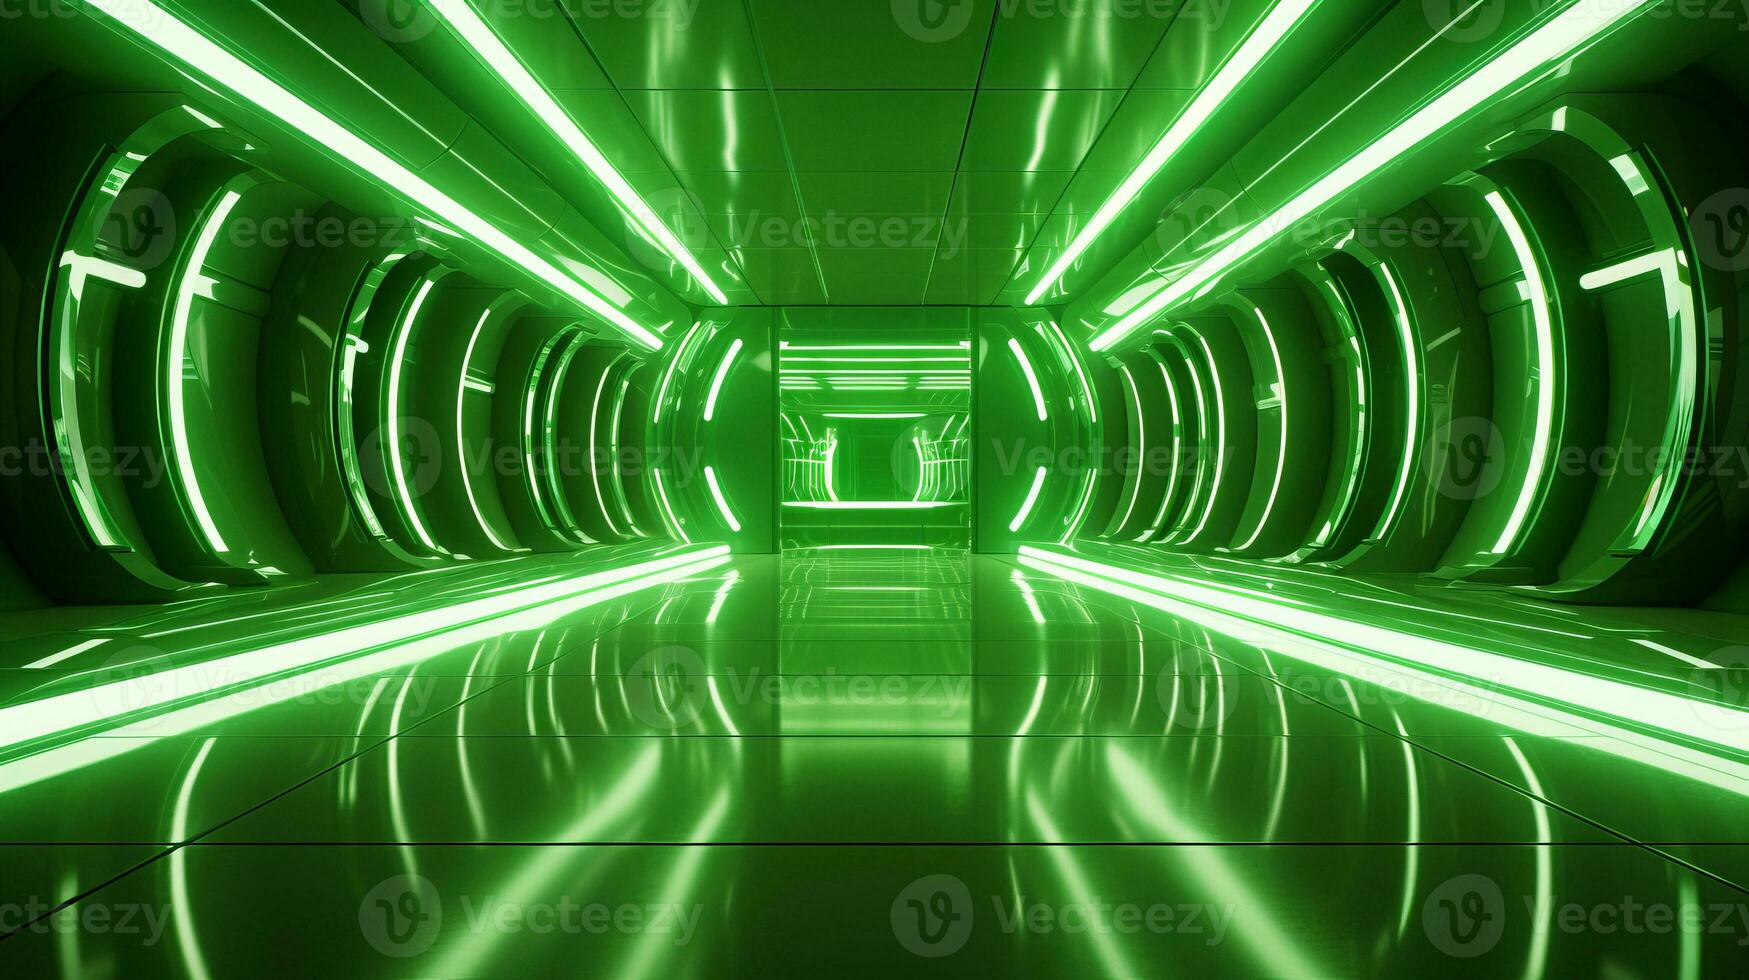 ai gegenereerd leeg groen futuristische tunnel. technologie ontwerp. foto